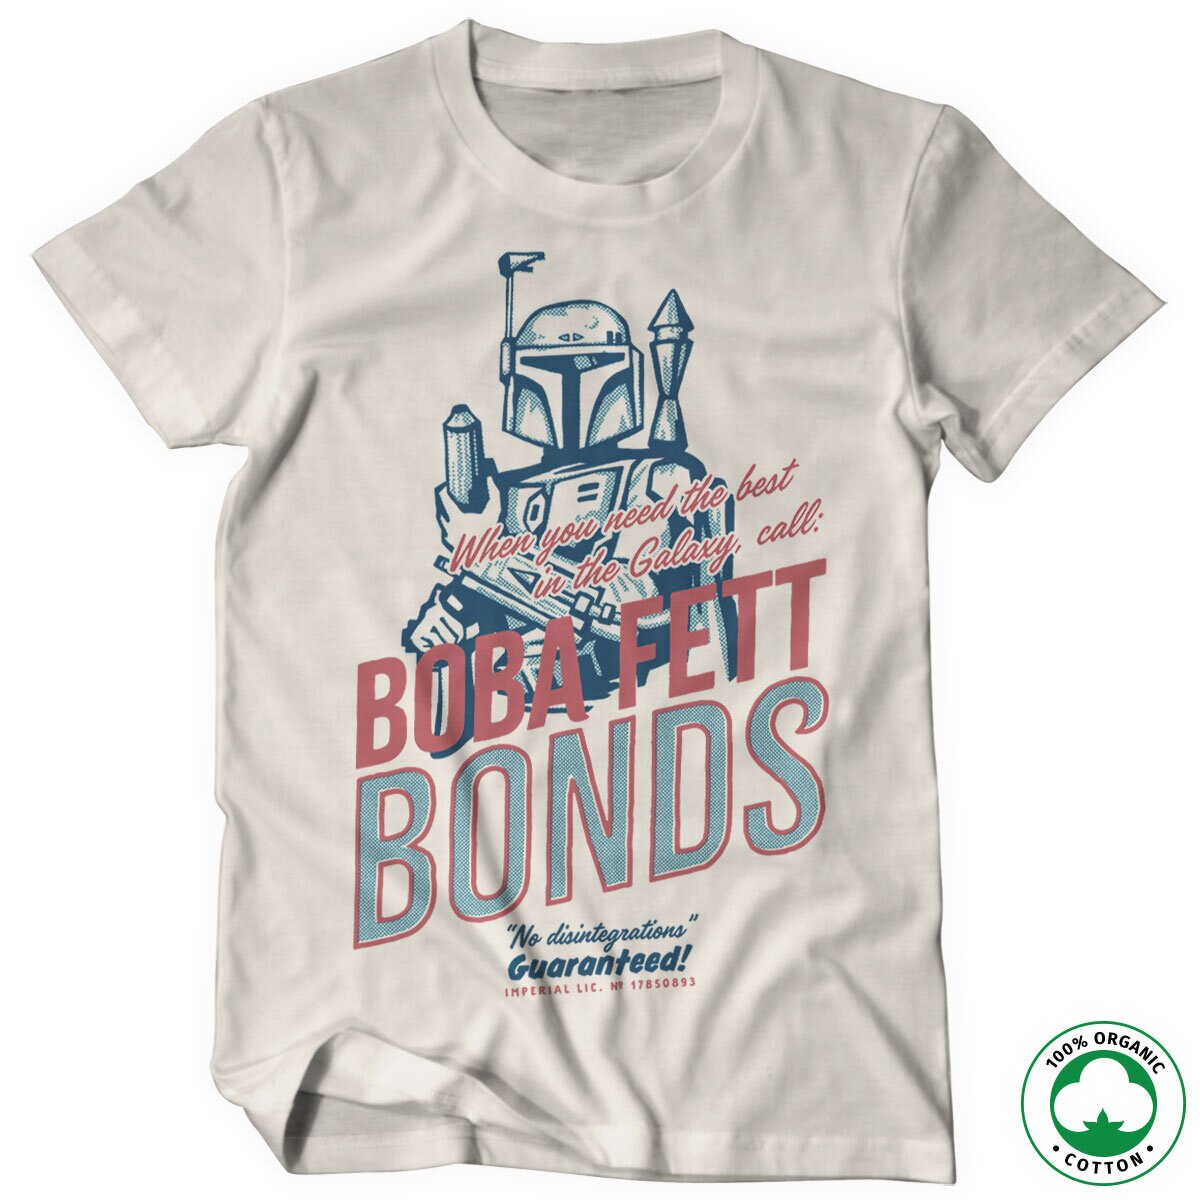 Boba Fett Bonds Organic T-Shirt